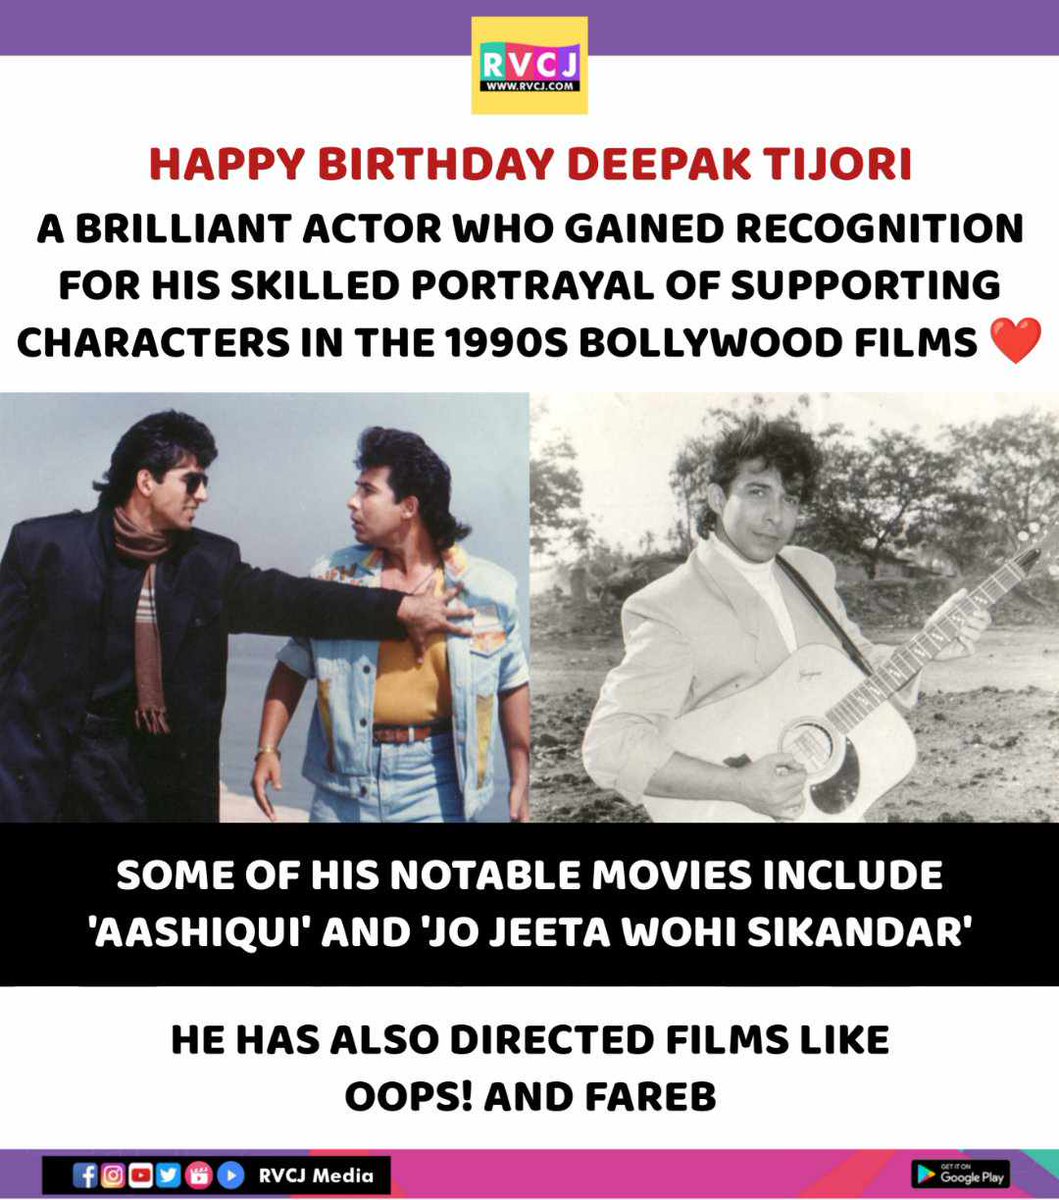 Happy Birthday Deepak Tijori

#deepaktijori #rvcjmovies #rvcjinsta